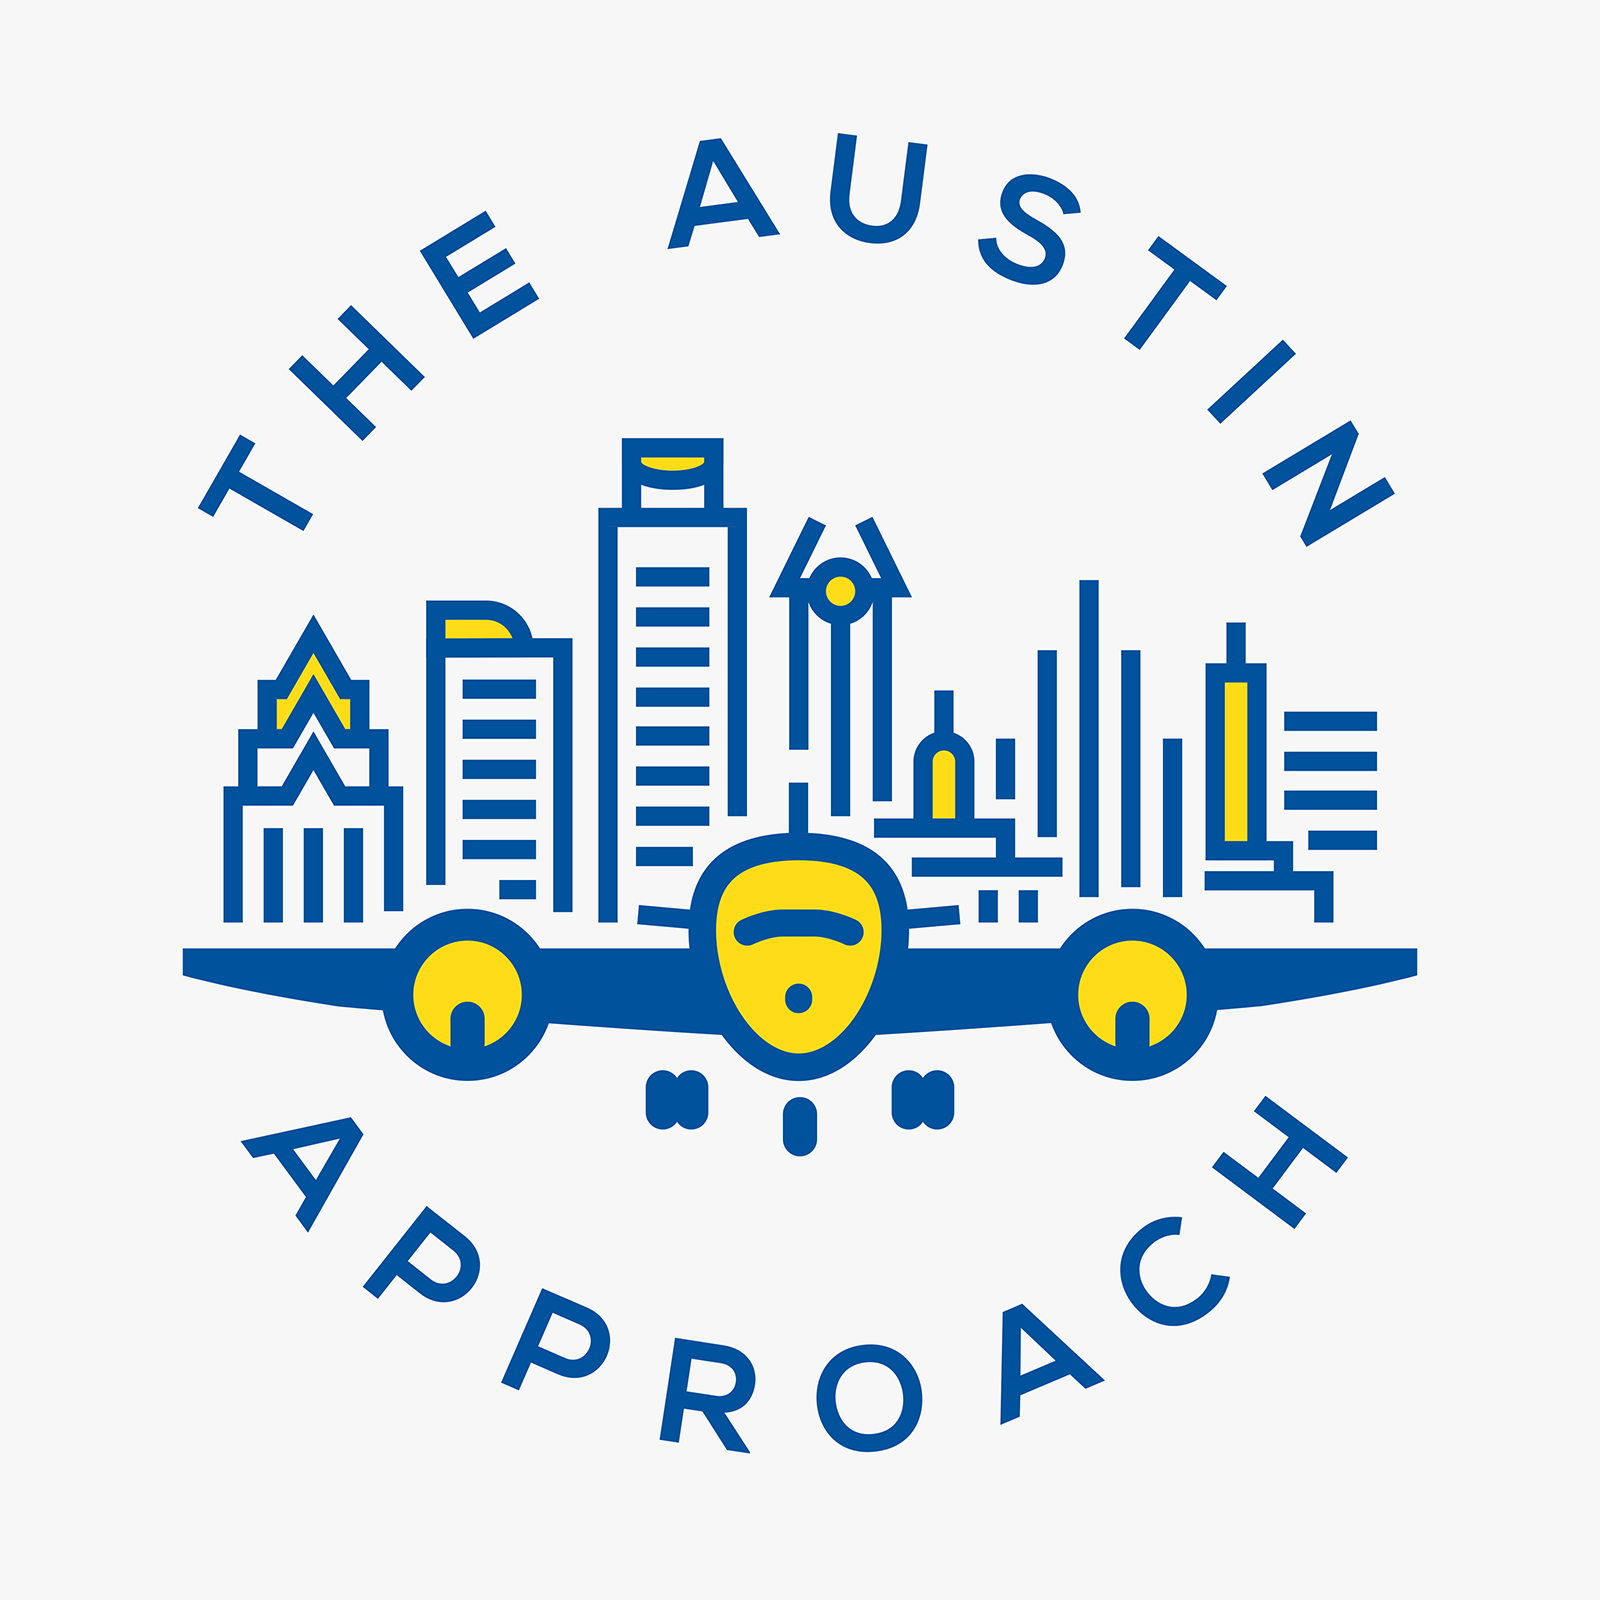 The Austin Approach logo